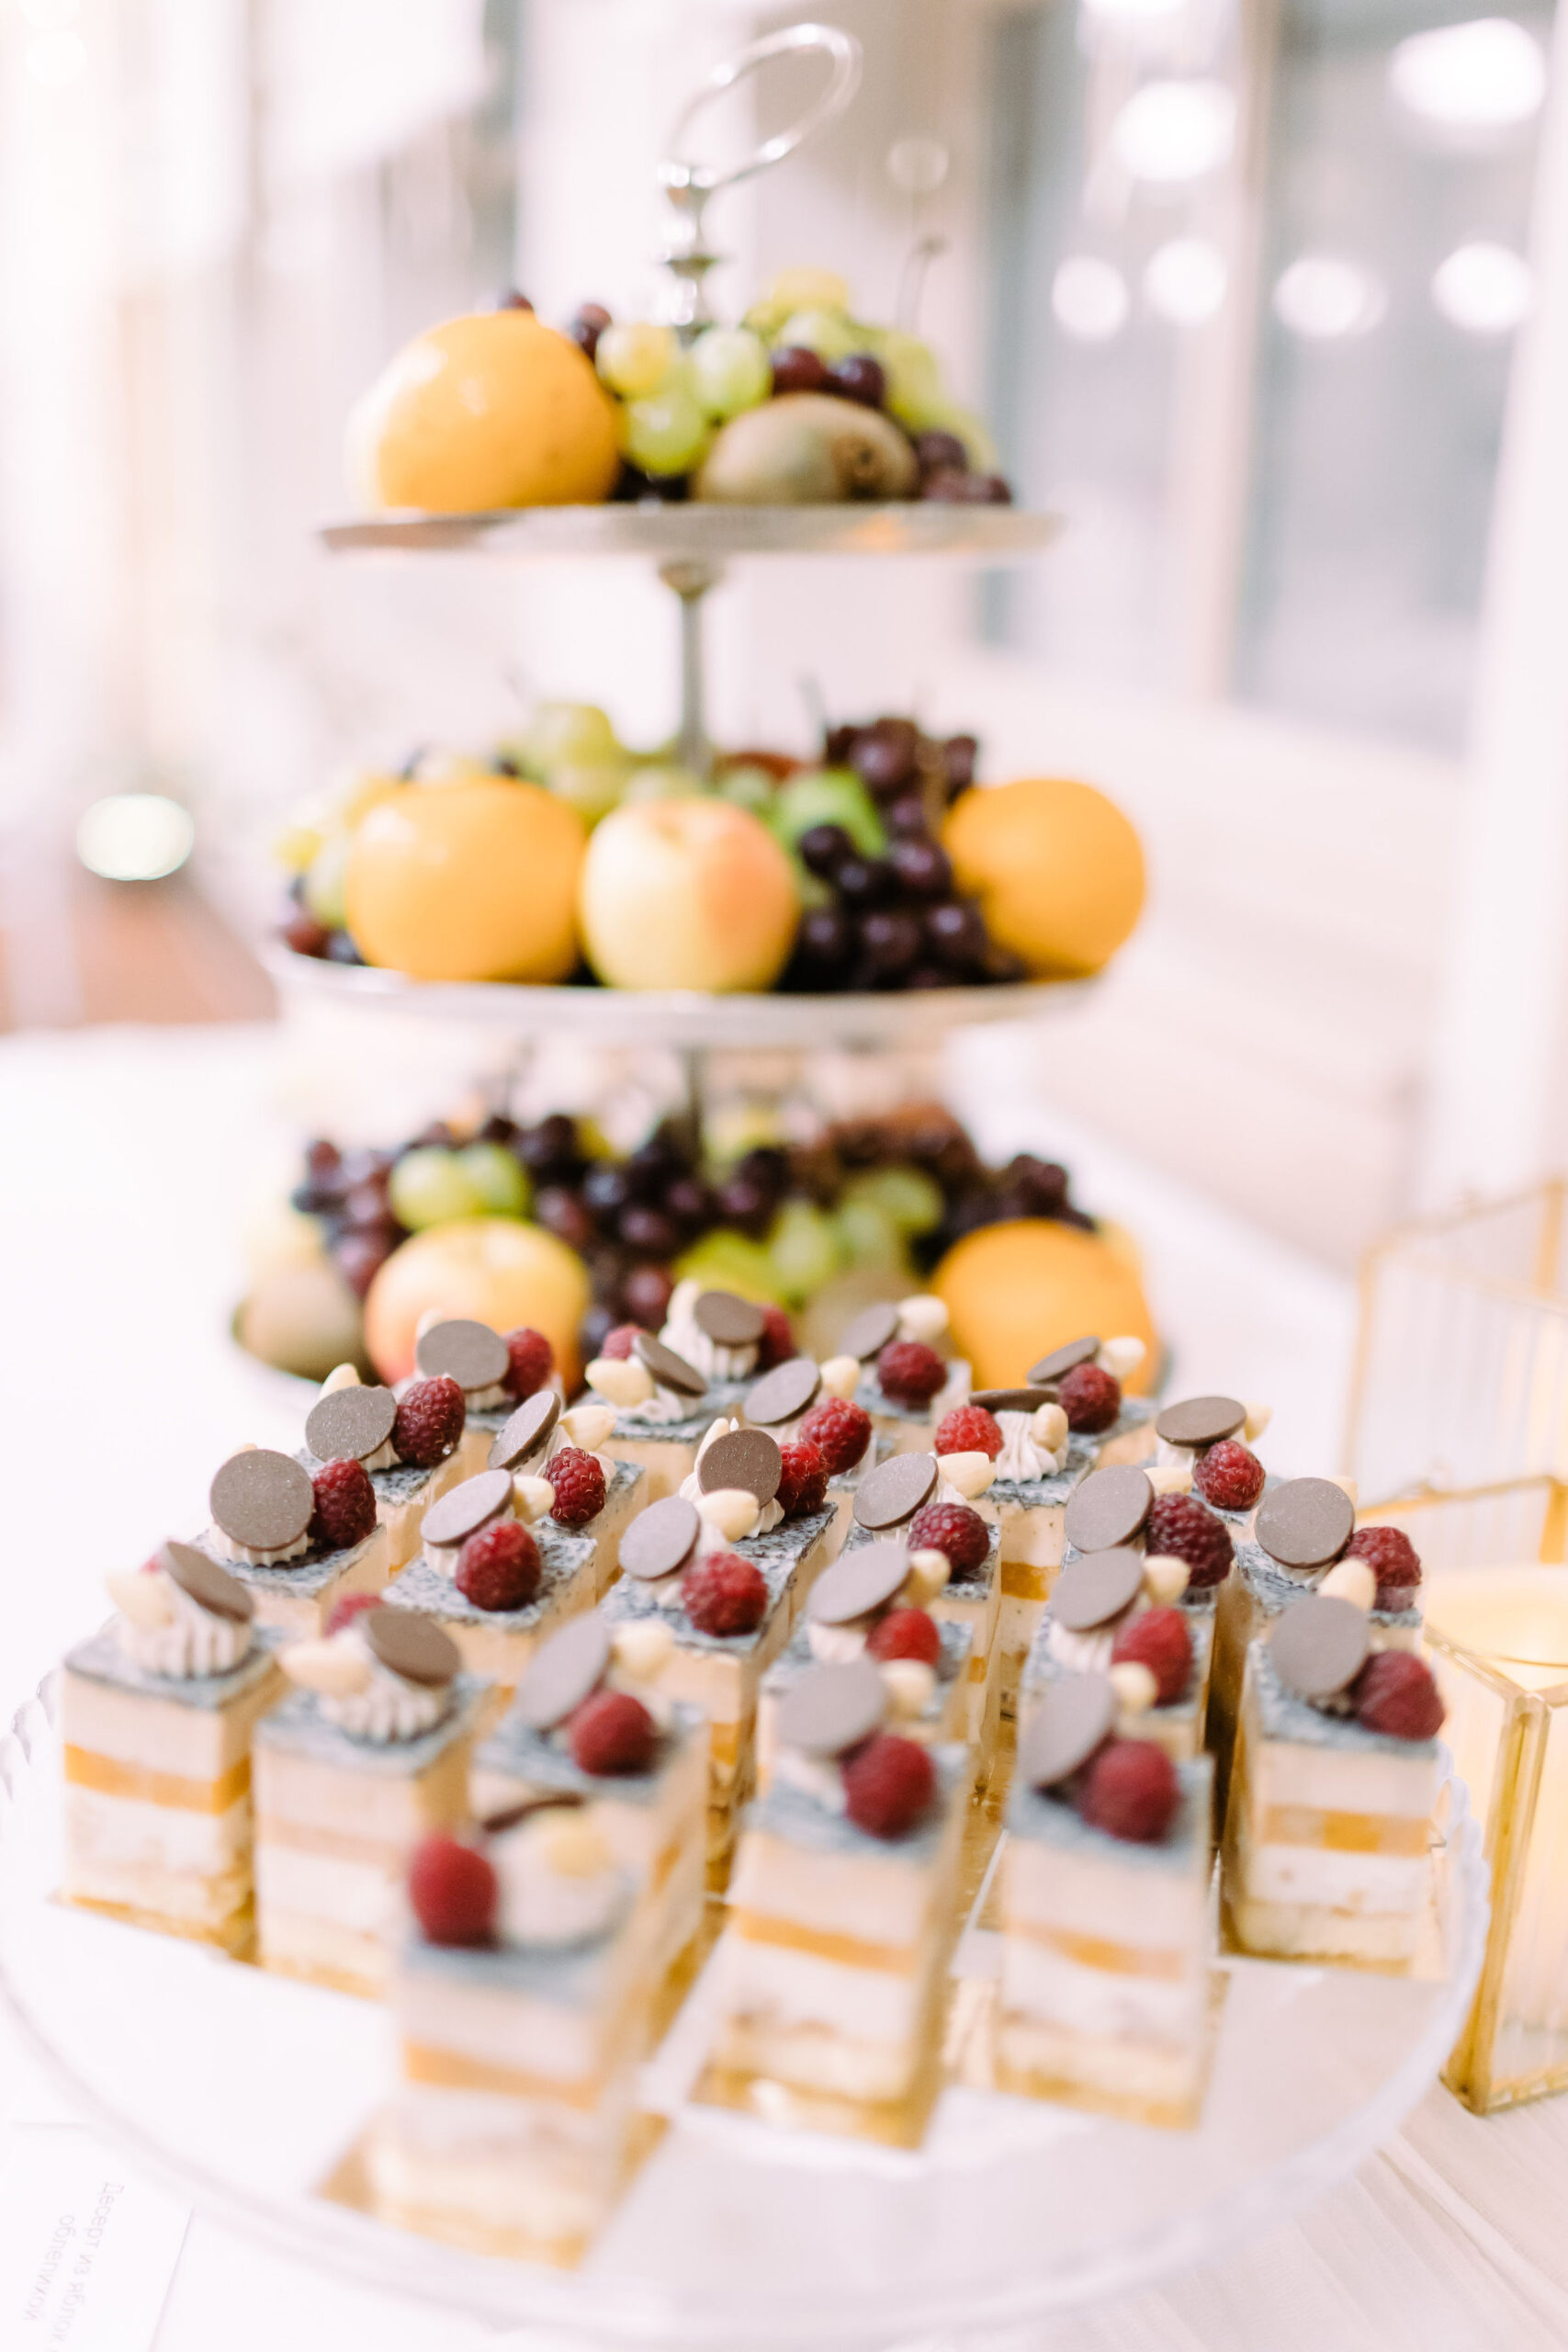 Wedding dessert table, photo: Rabloczky Andr